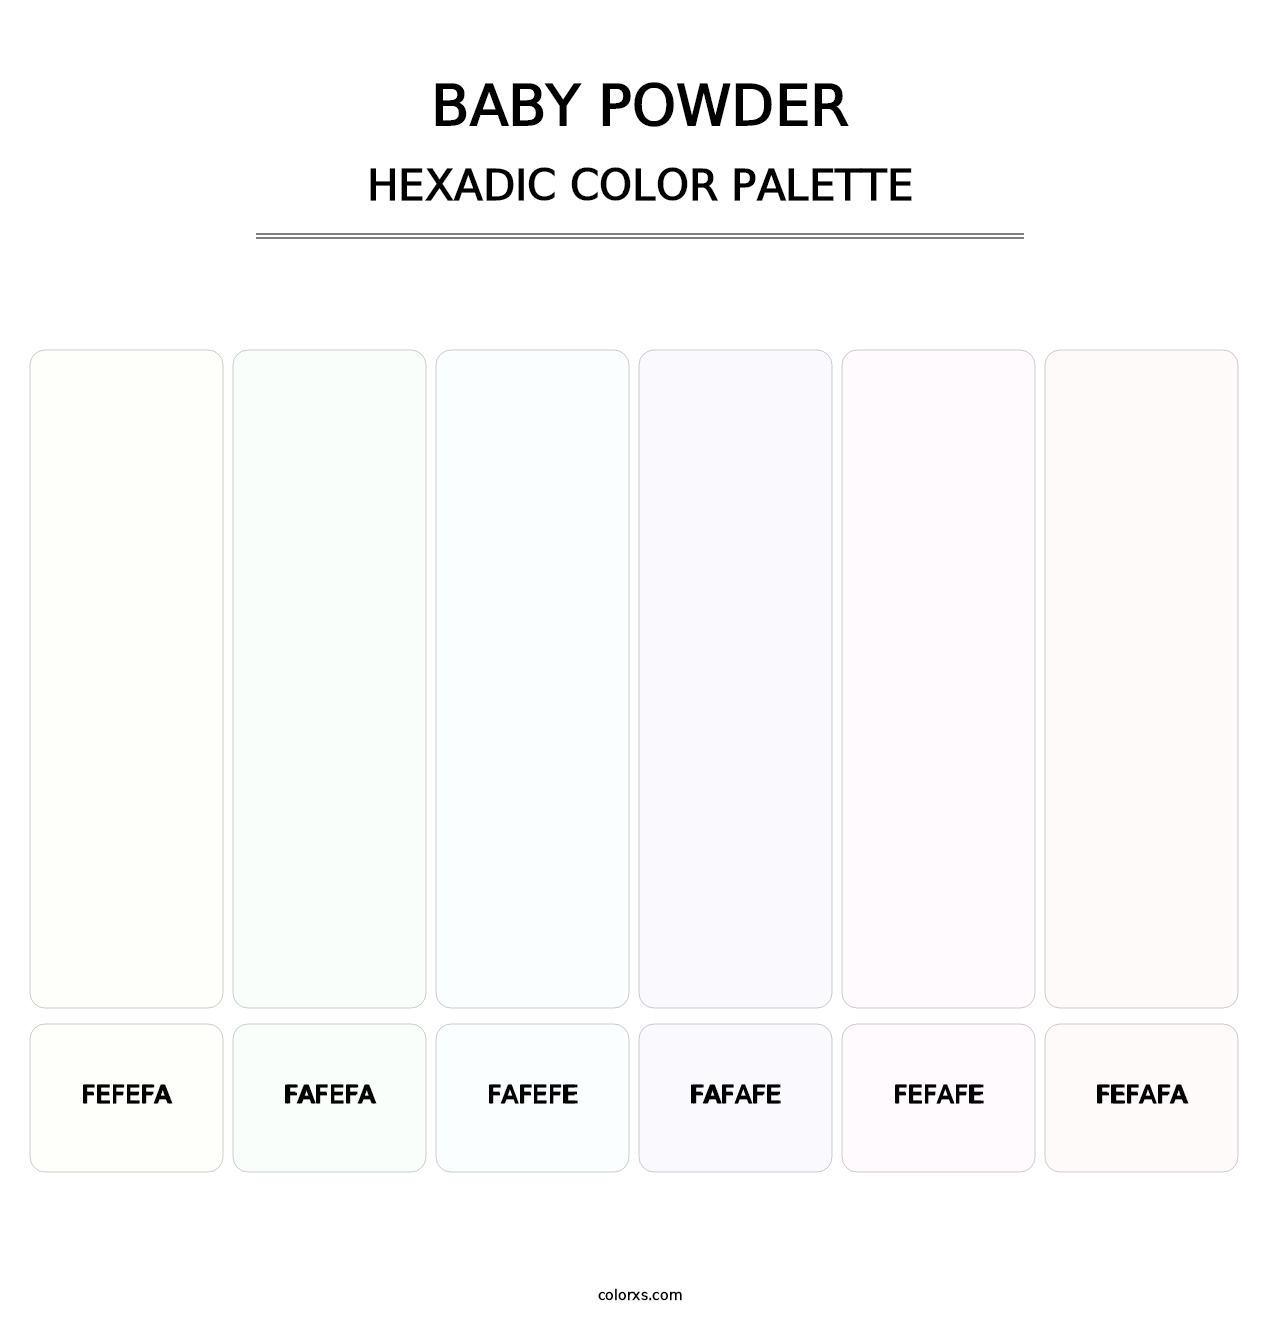 Baby Powder - Hexadic Color Palette